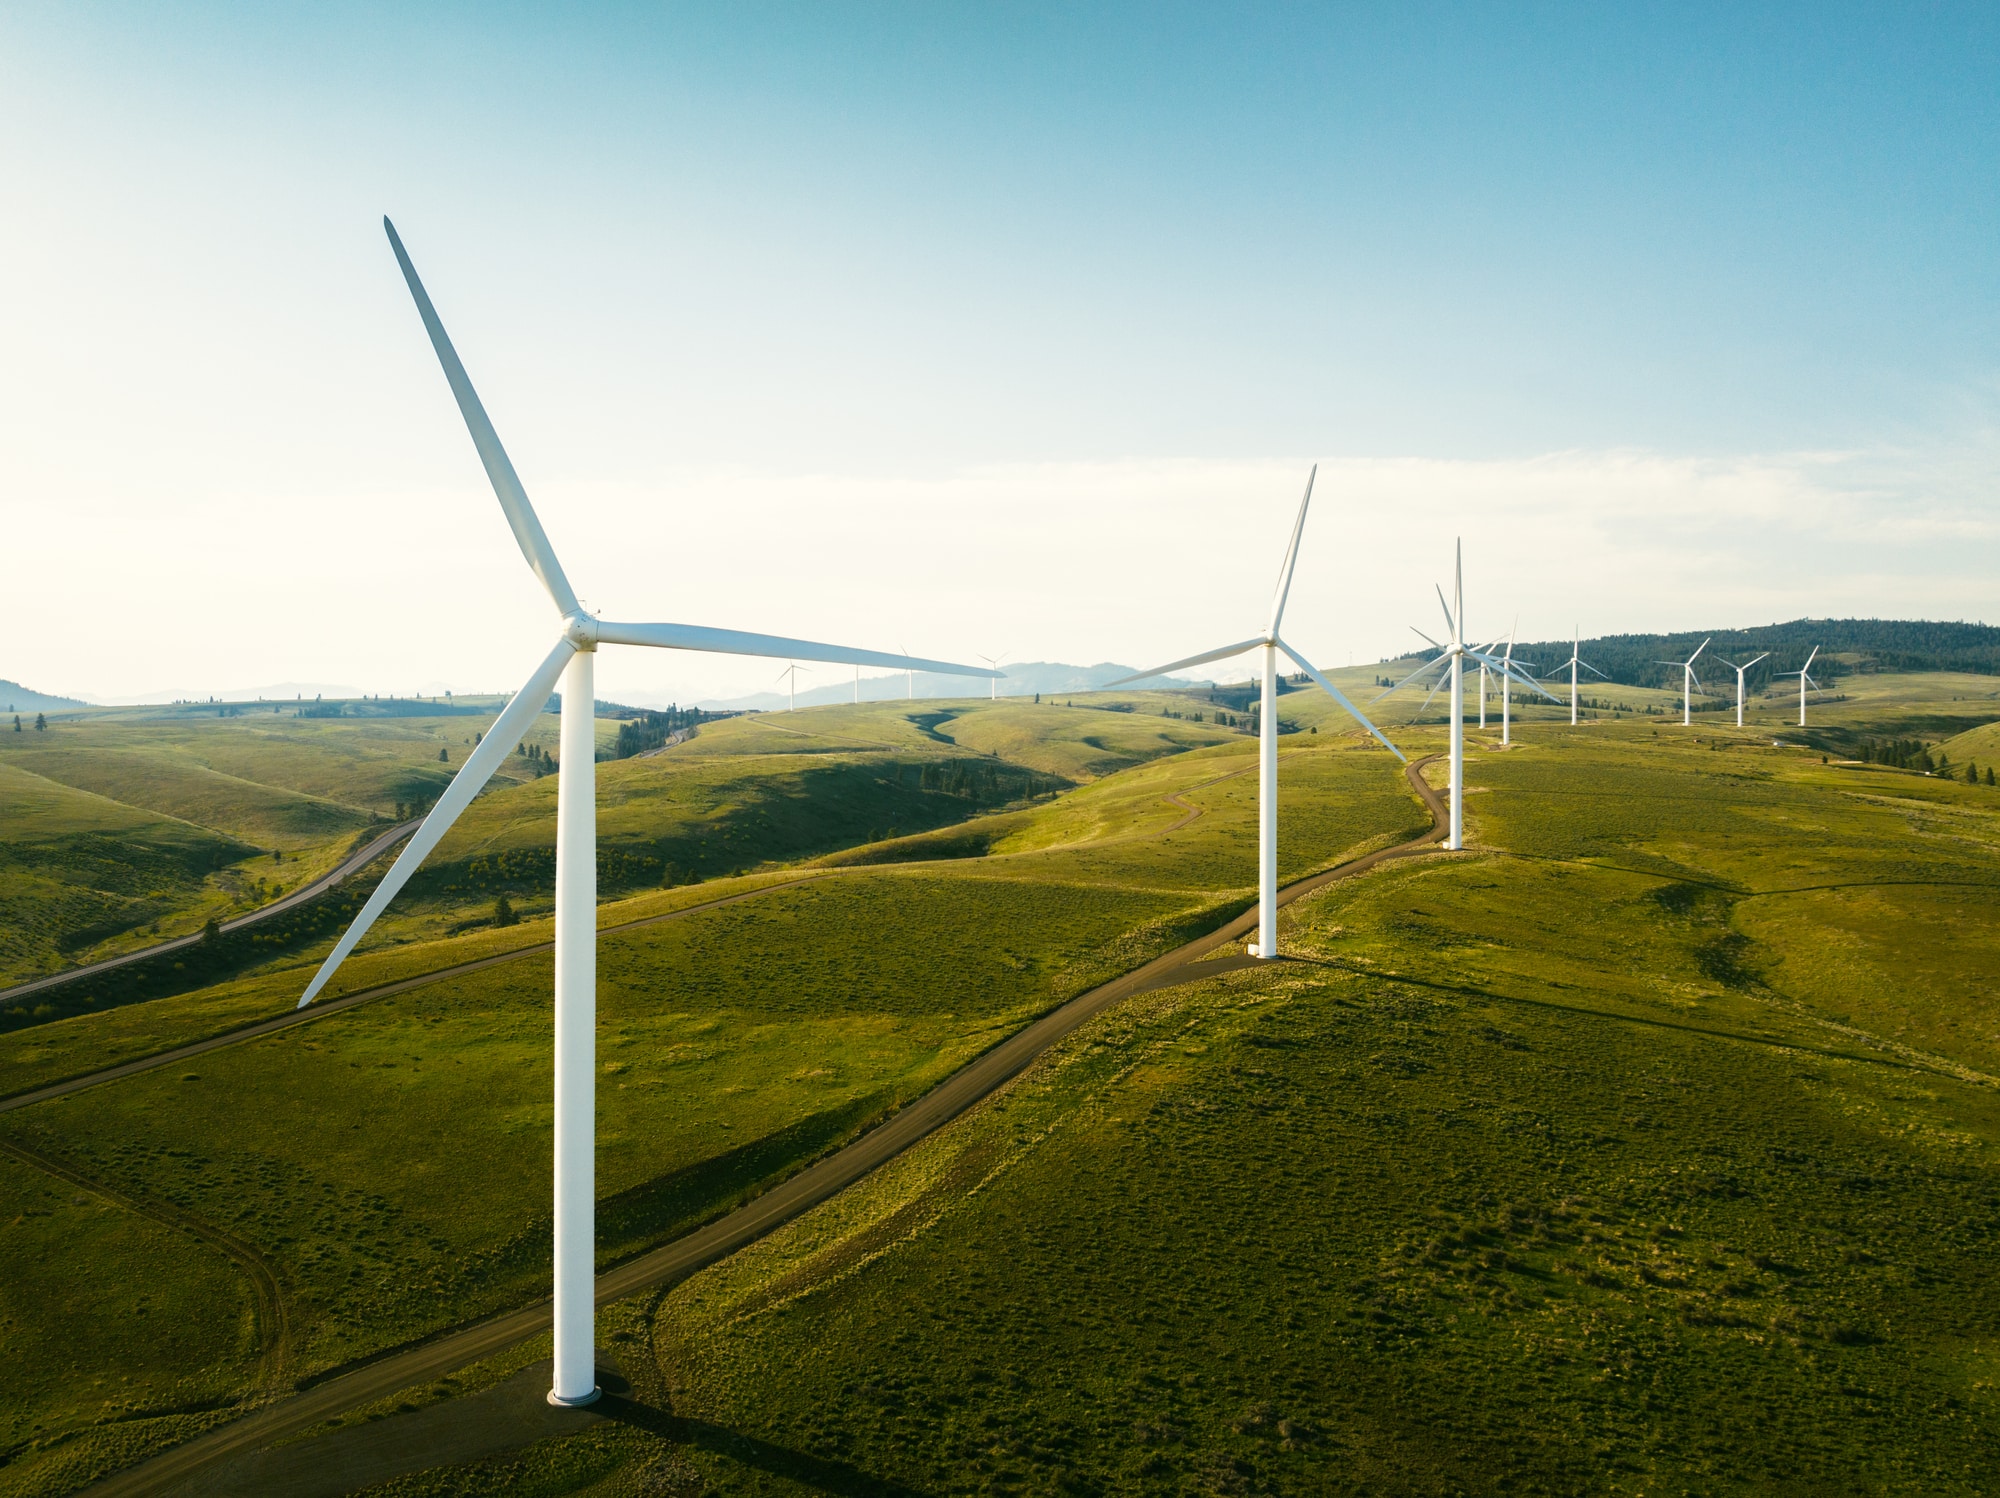 Wind turbines dot a green hill landscape